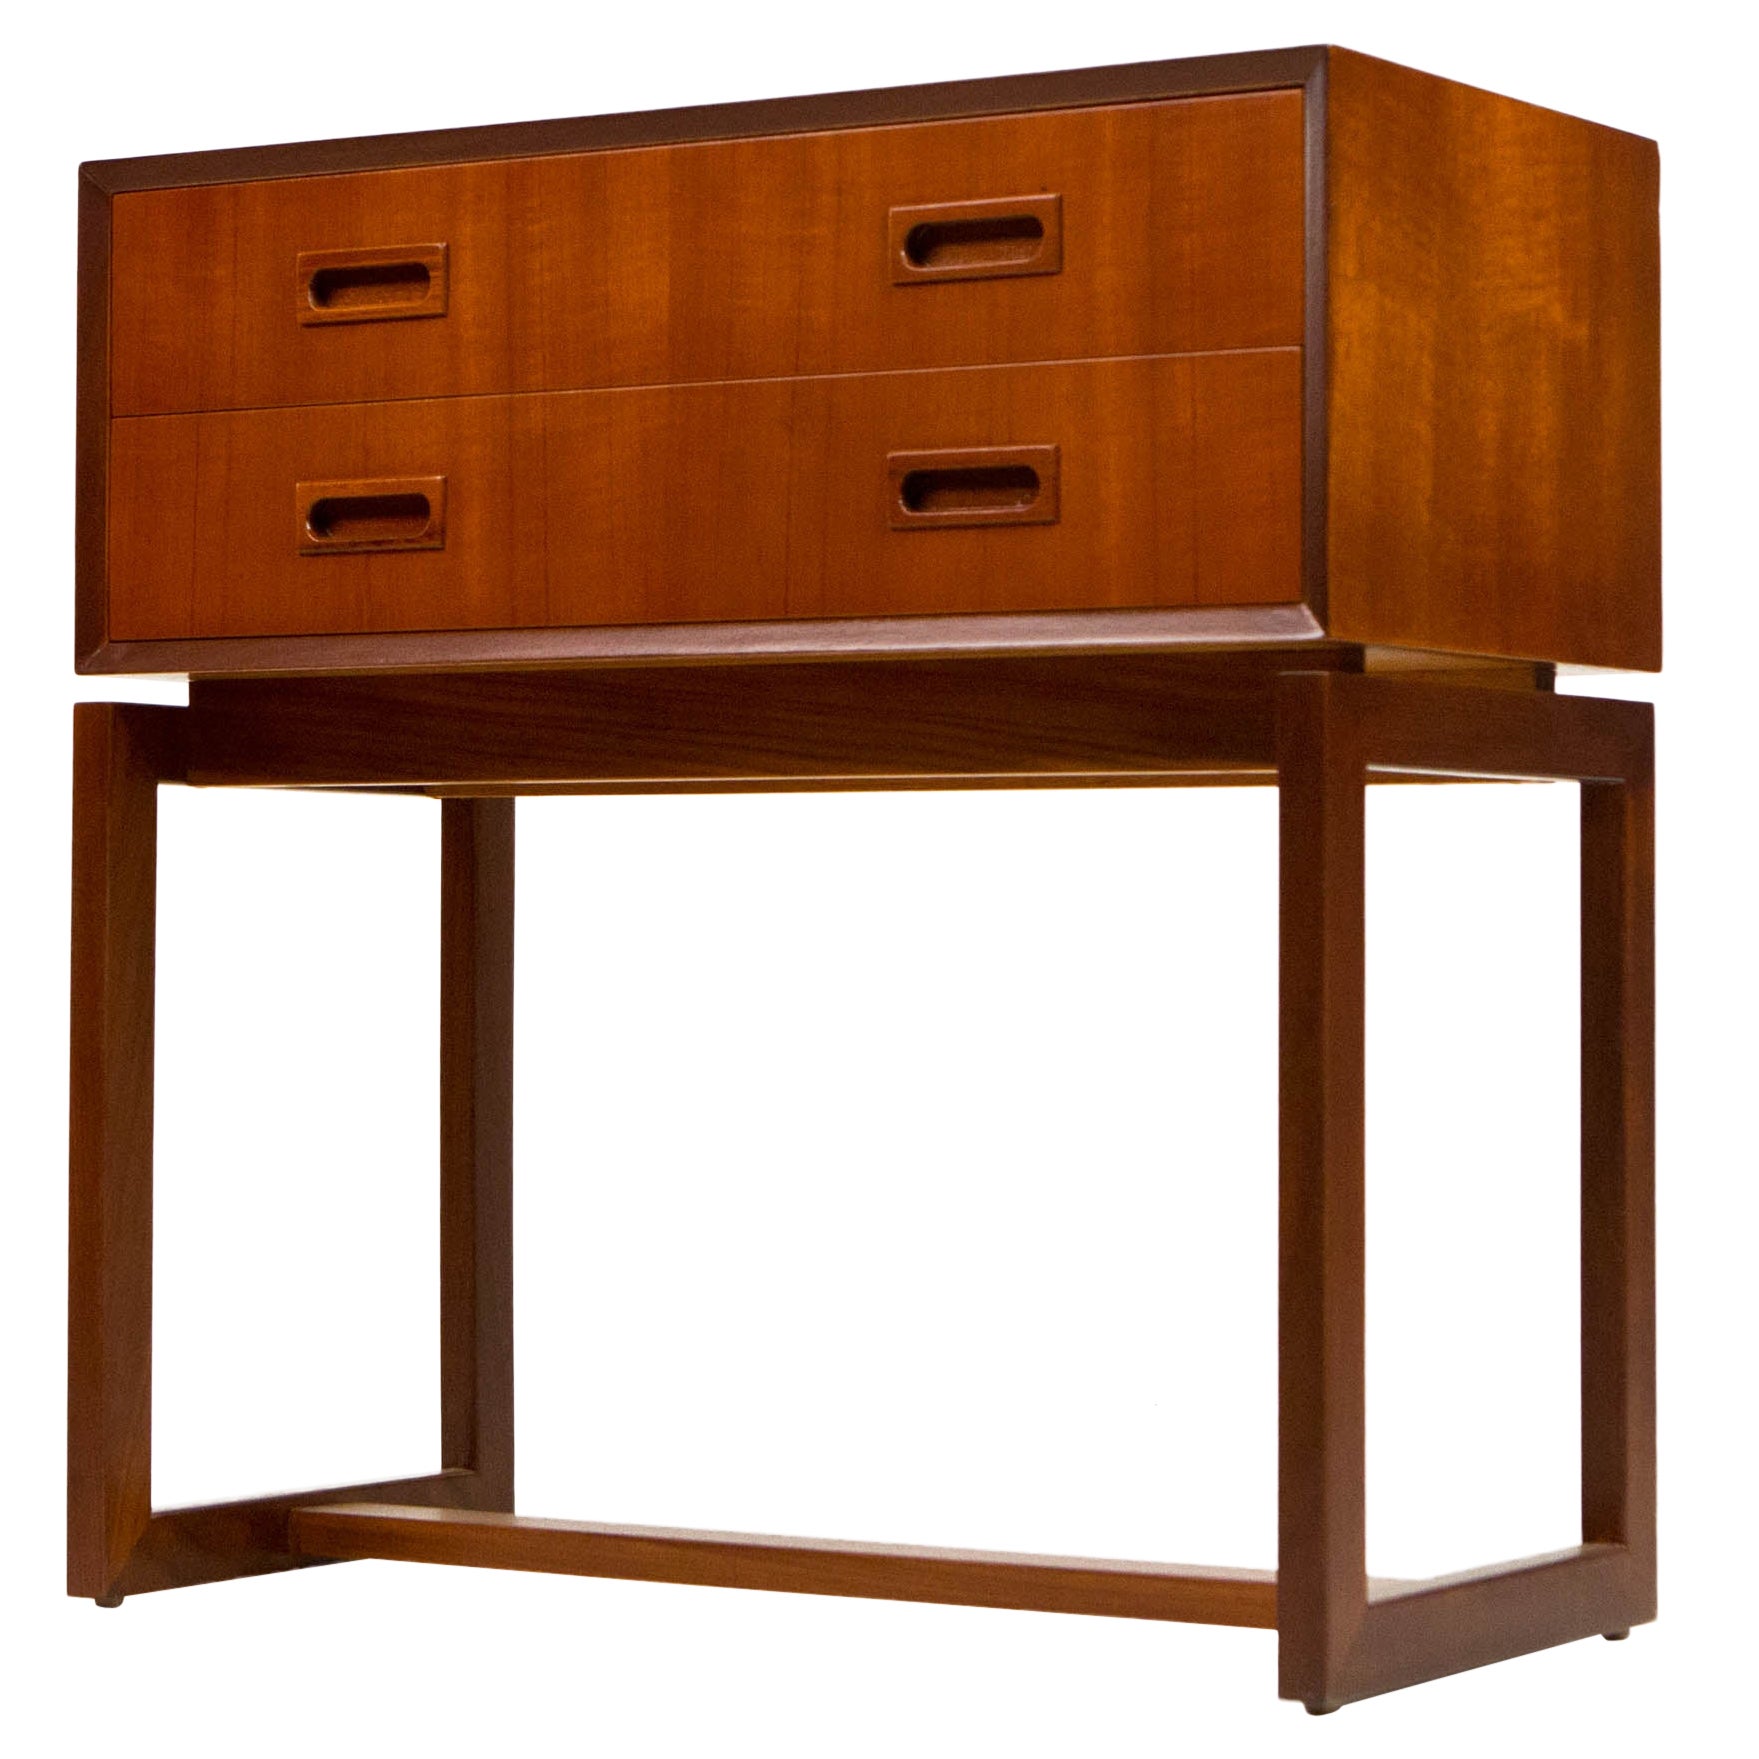 Teak Two Drawer Bureau with Beveled Edge, Danish Design 1950's For Sale